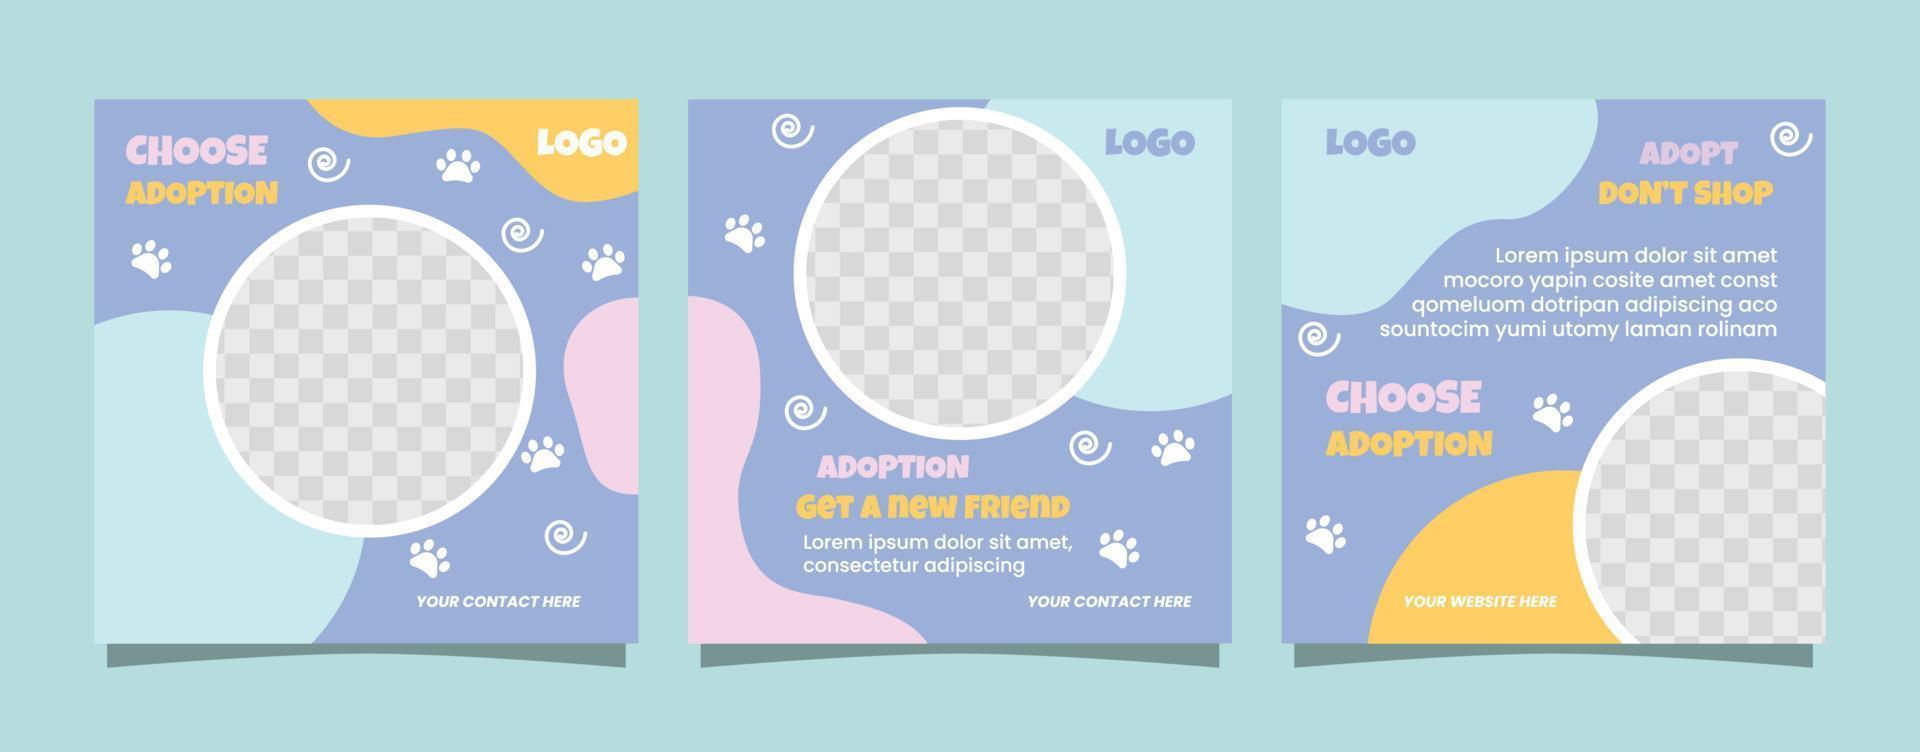 Pet adoption social media post template vector